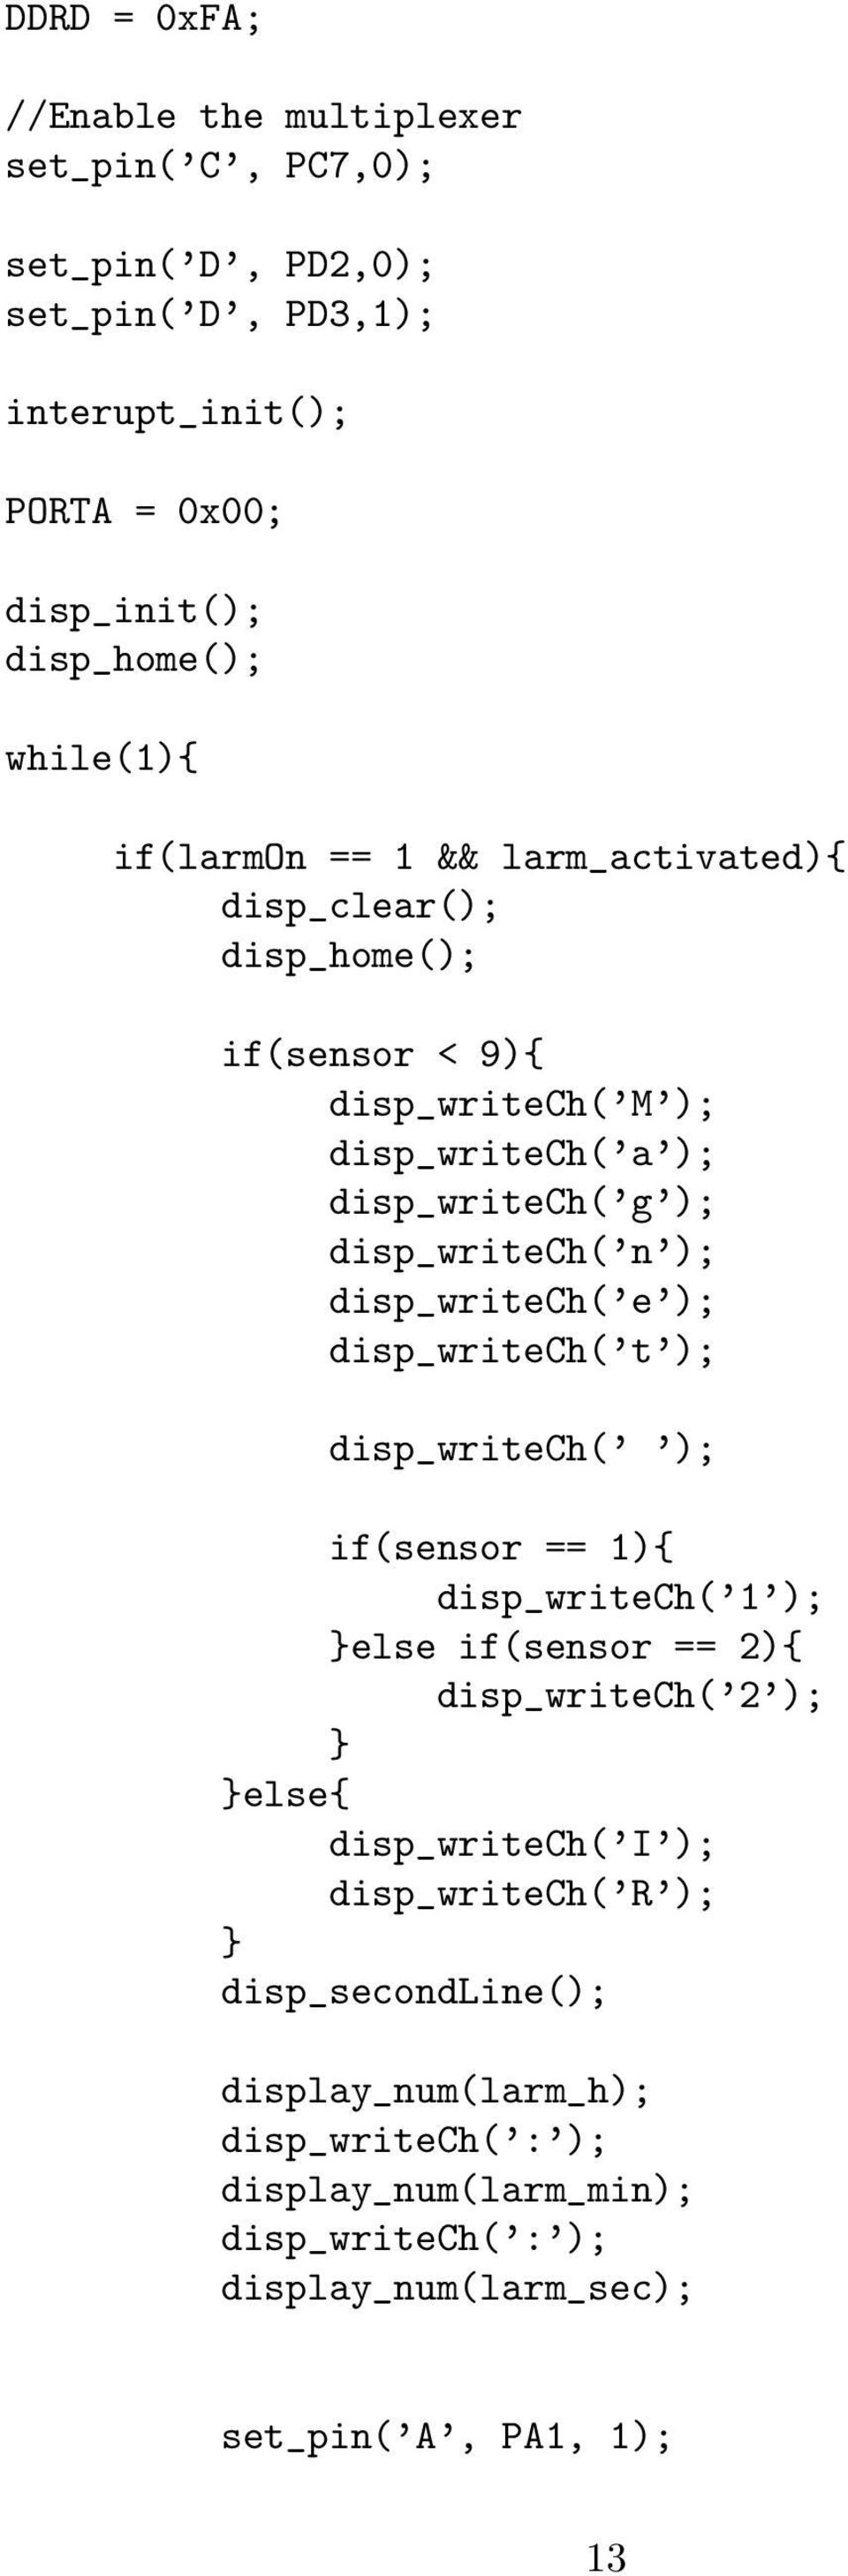 ); disp_writech( e ); disp_writech( t ); disp_writech( ); if(sensor == 1){ disp_writech( 1 ); else if(sensor == 2){ disp_writech( 2 ); else{ disp_writech( I );